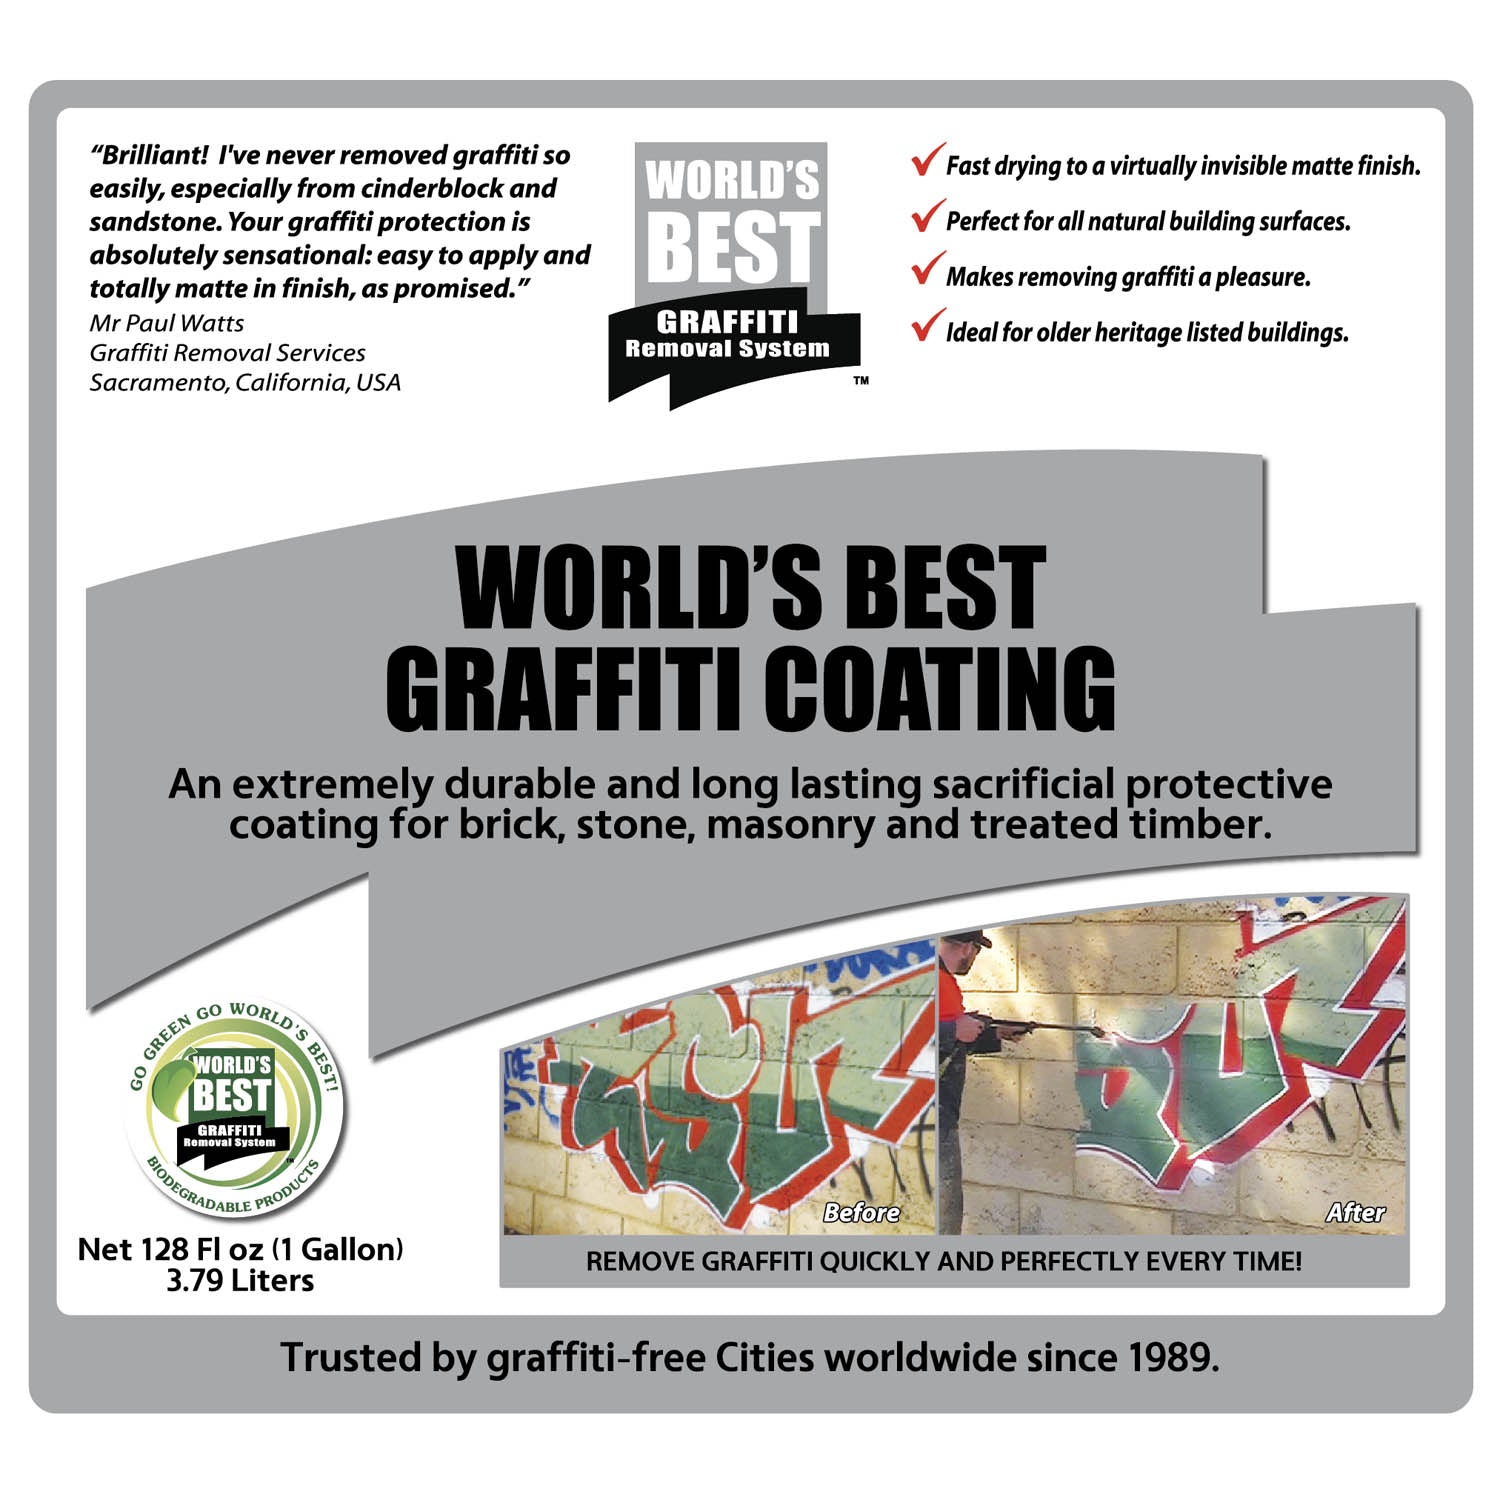 World's Best Graffiti Coating